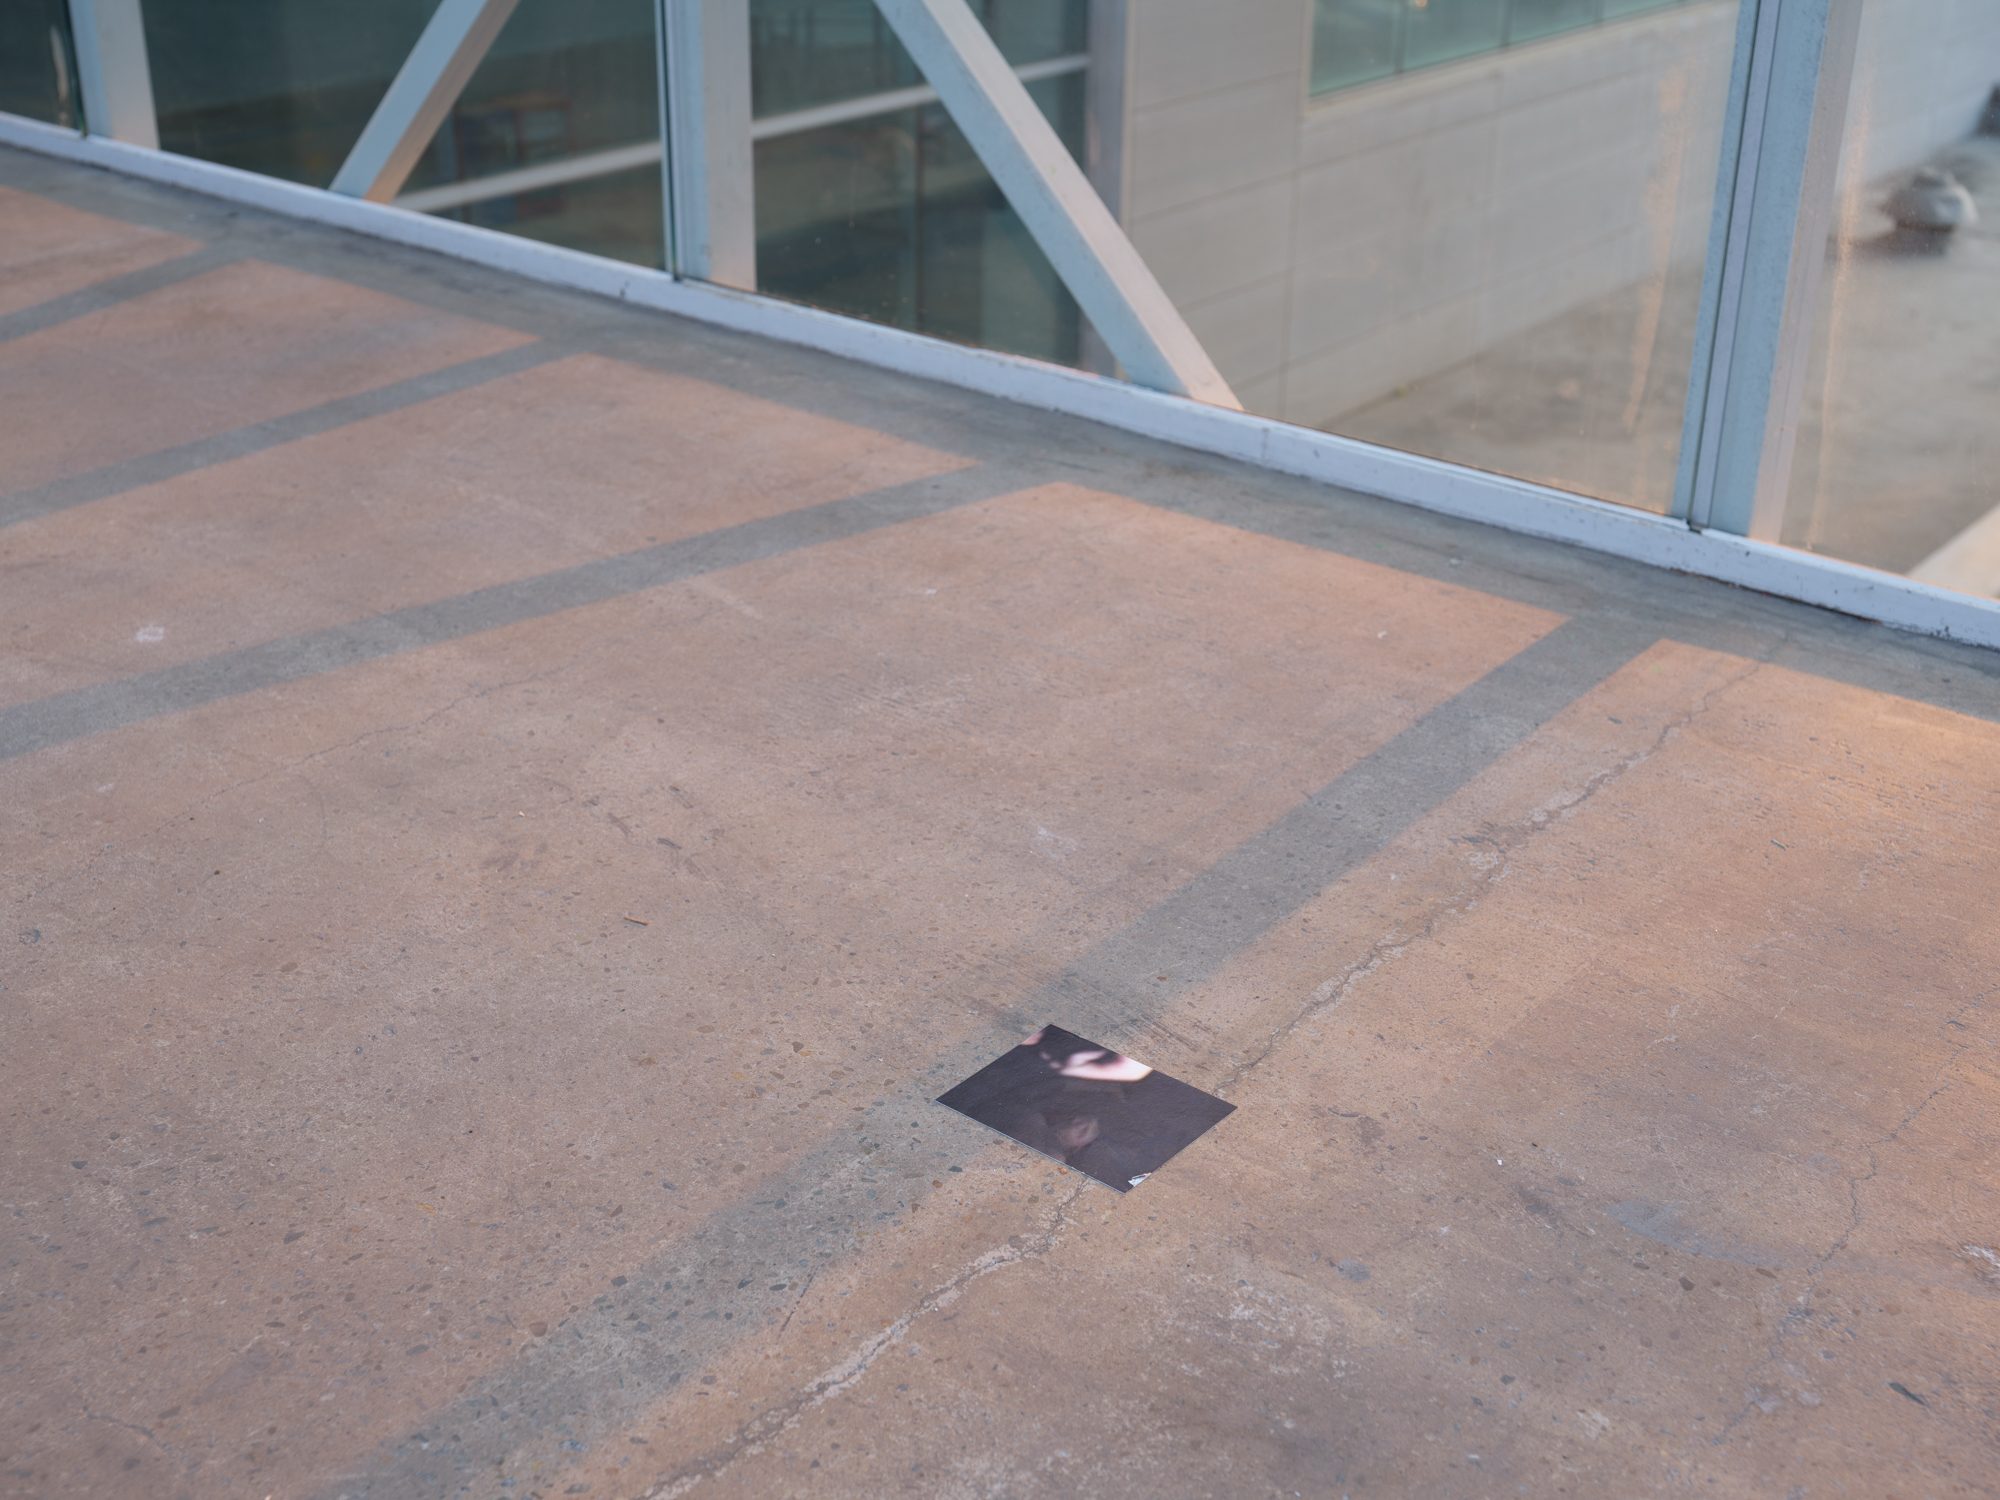 Scale Figures, installation view, Gwangju Biennale Hall Bridge, 2023